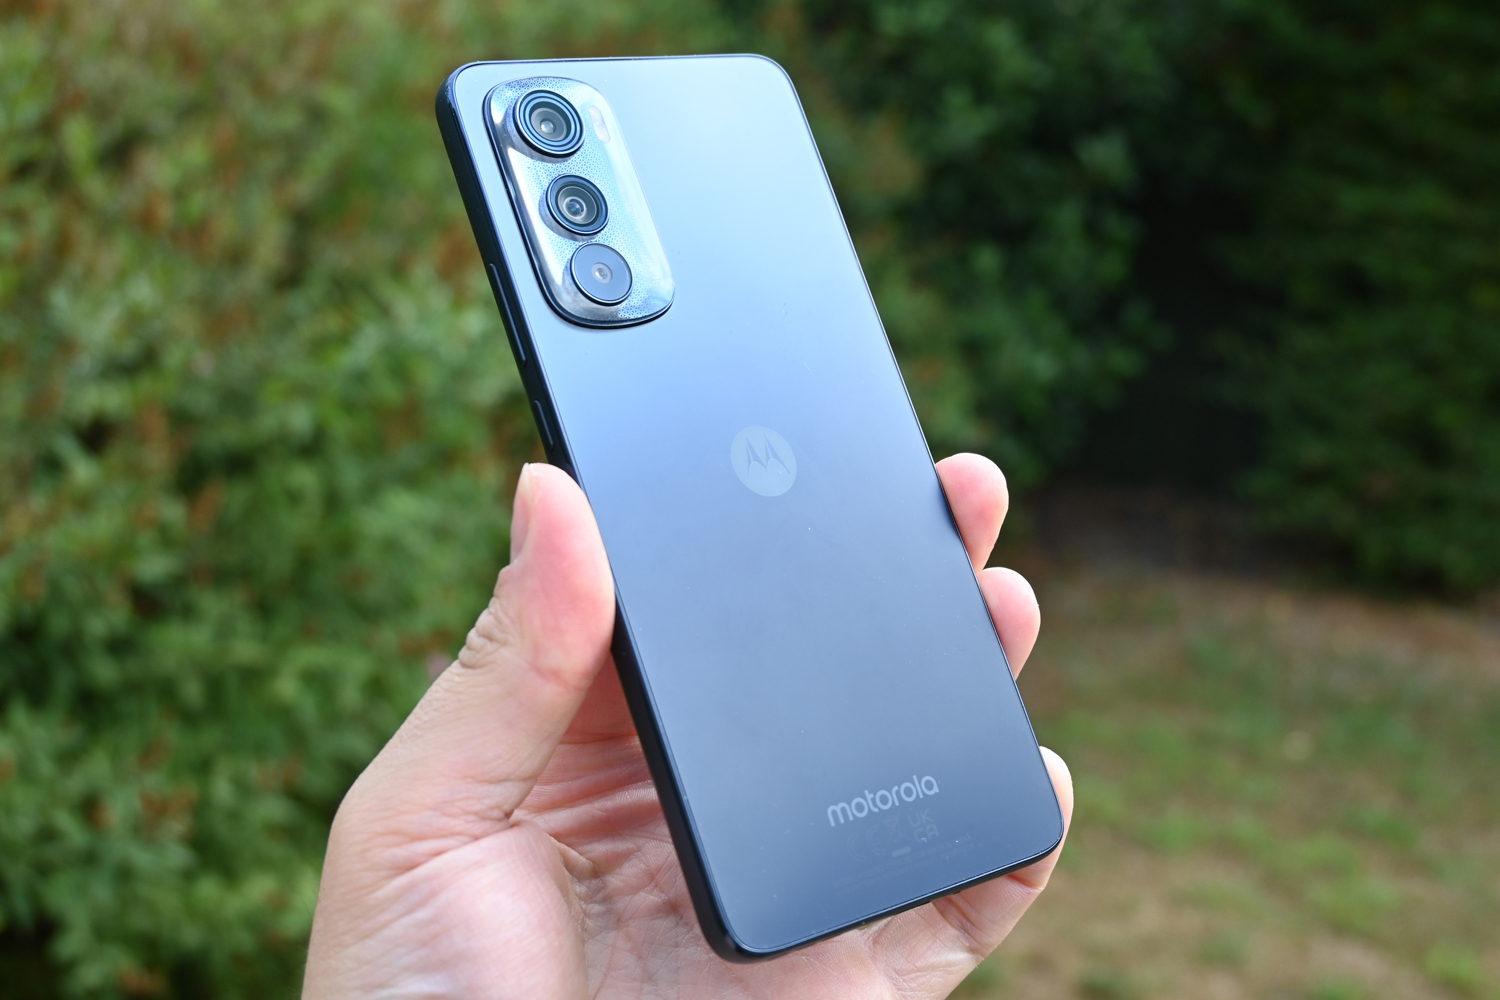 Motorola Edge 30 smartphone in hand rear